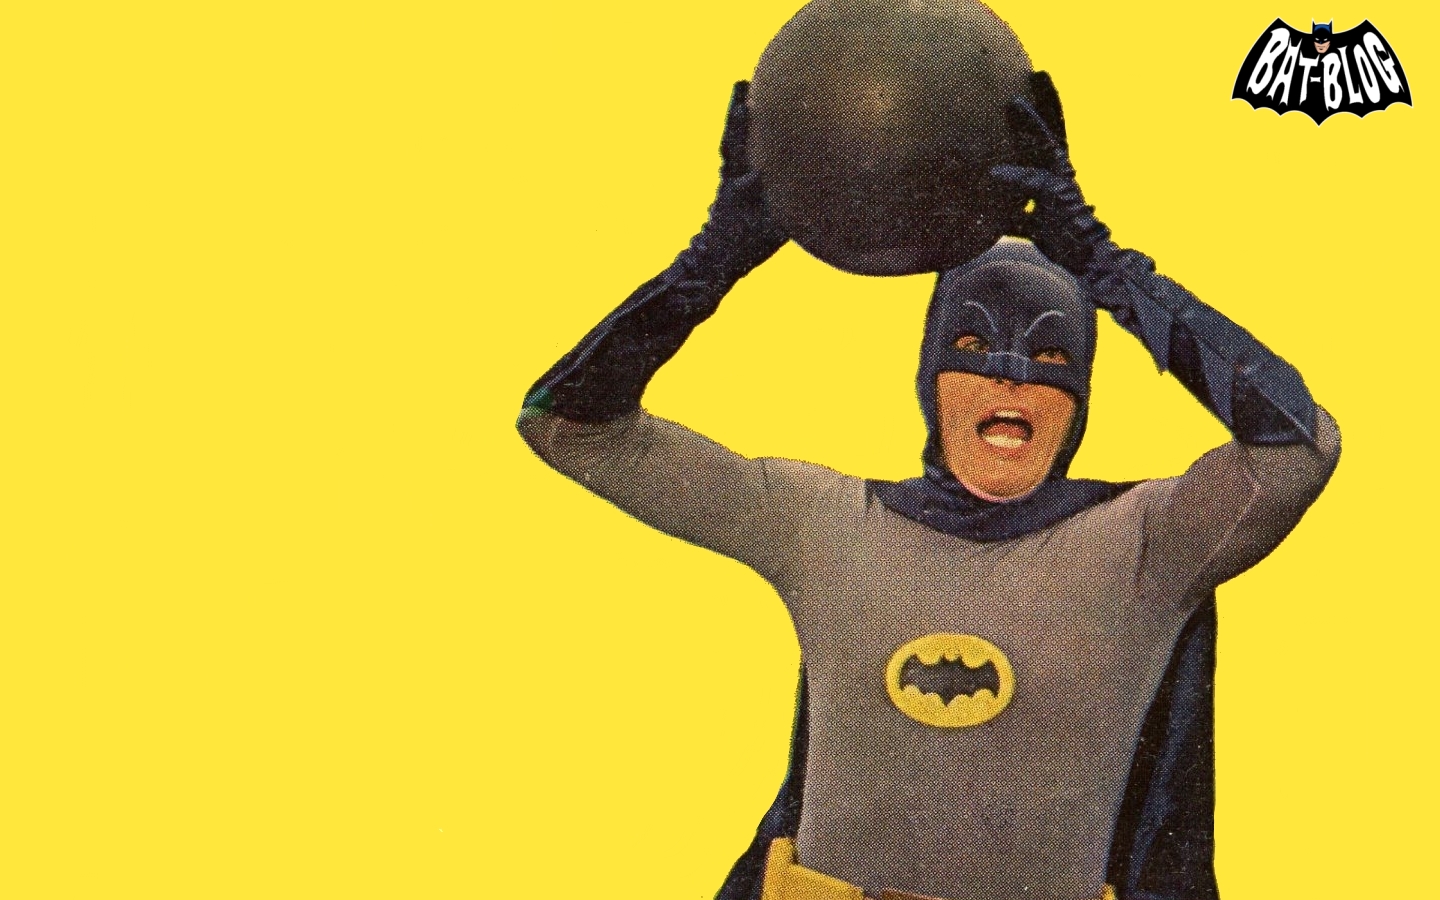 BAT - BLOG : BATMAN TOYS and COLLECTIBLES: NEW BATMAN MOVIE BACKGROUNDS -  Wacky Wallpaper Wednesday!